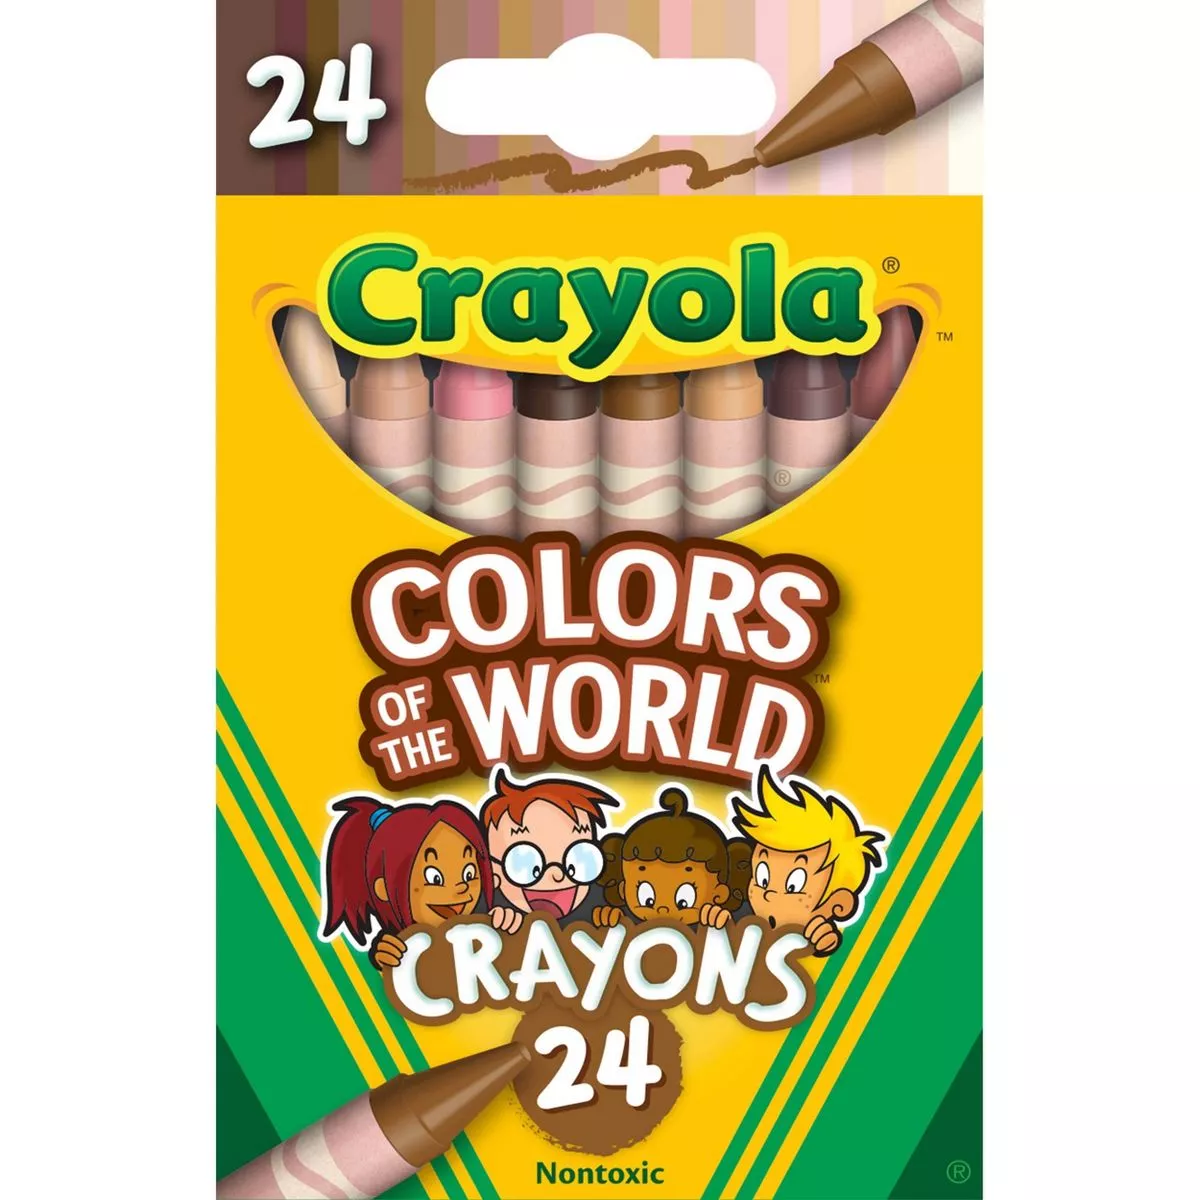 Crayola 115pc Imagination Art Set With Case : Target